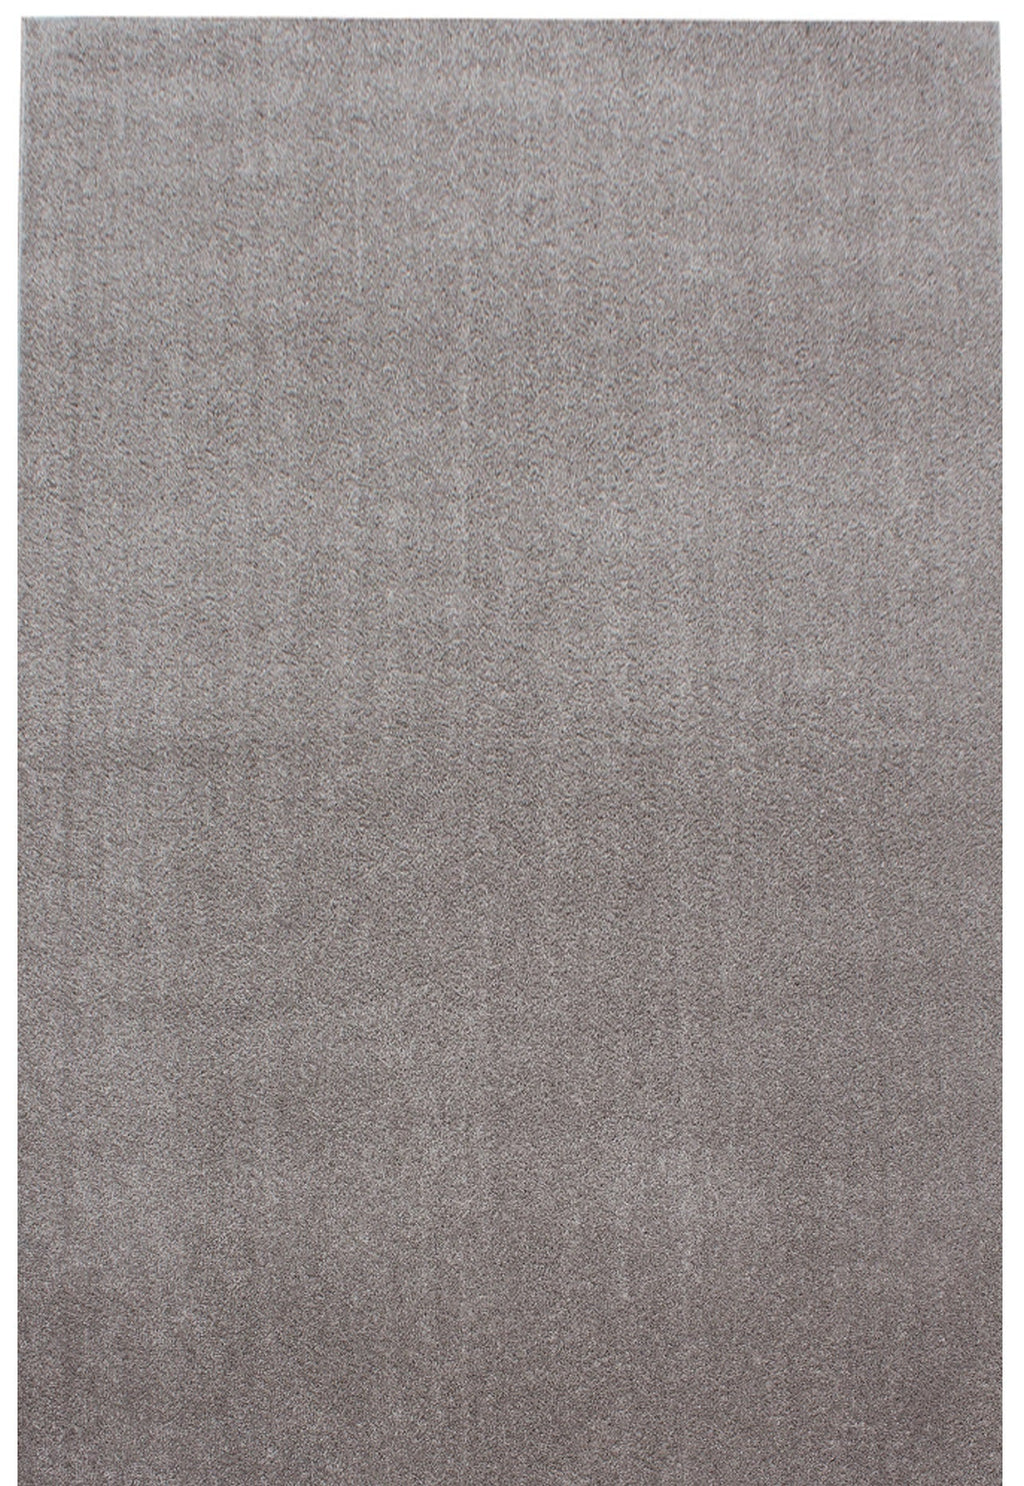 Teppich, Ata beige, rechteckig, Kurzflor 12mm 7000, Höhe